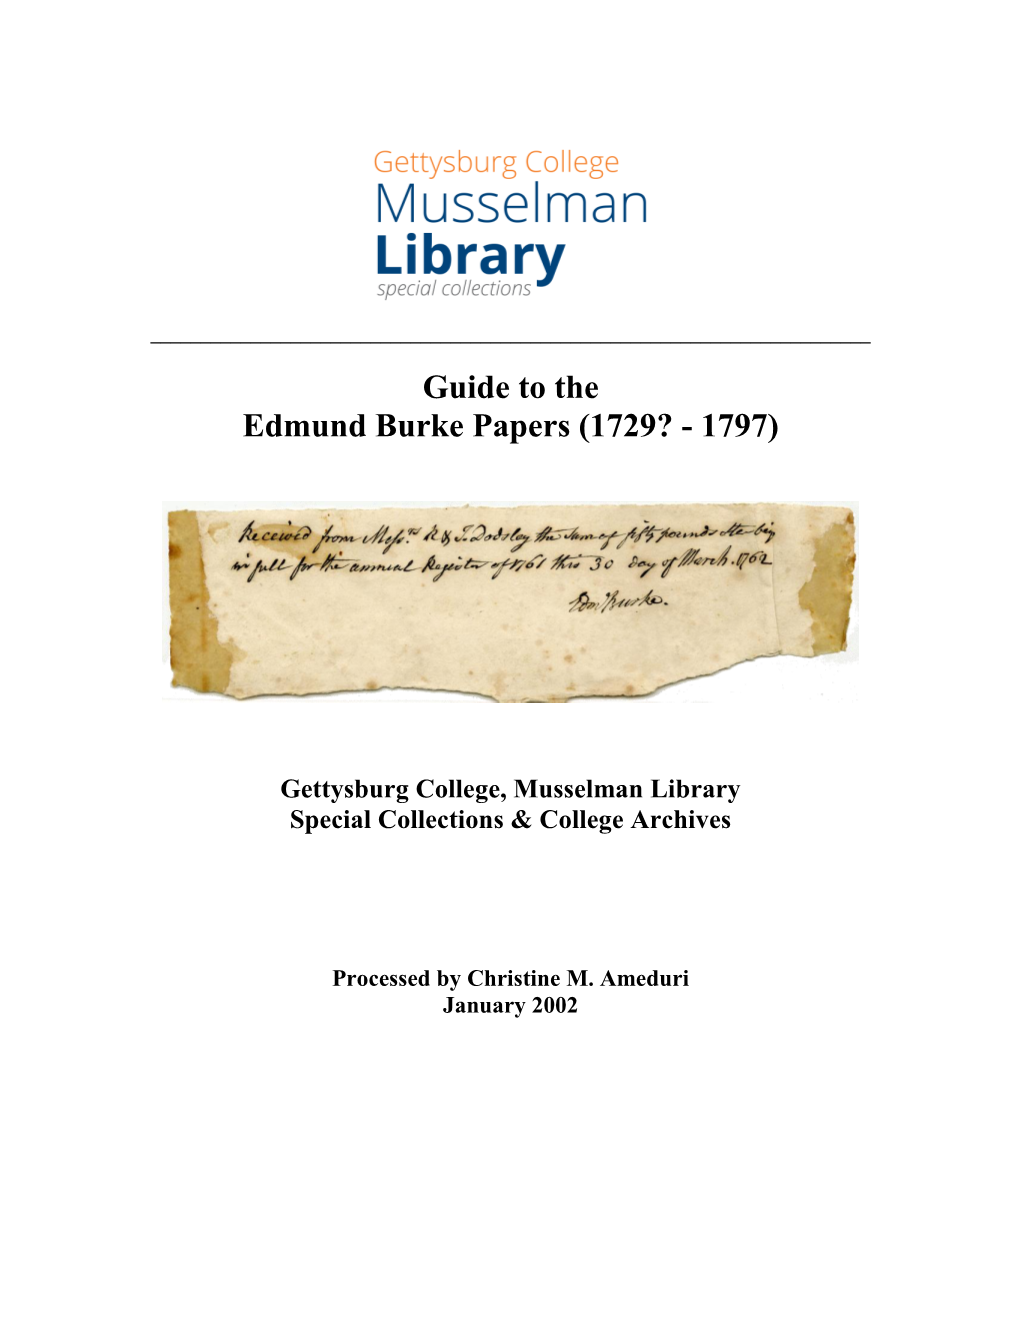 MS - 016: Edmund Burke Papers (1729? - 1797) (1 Box, .27 Cubic Feet)